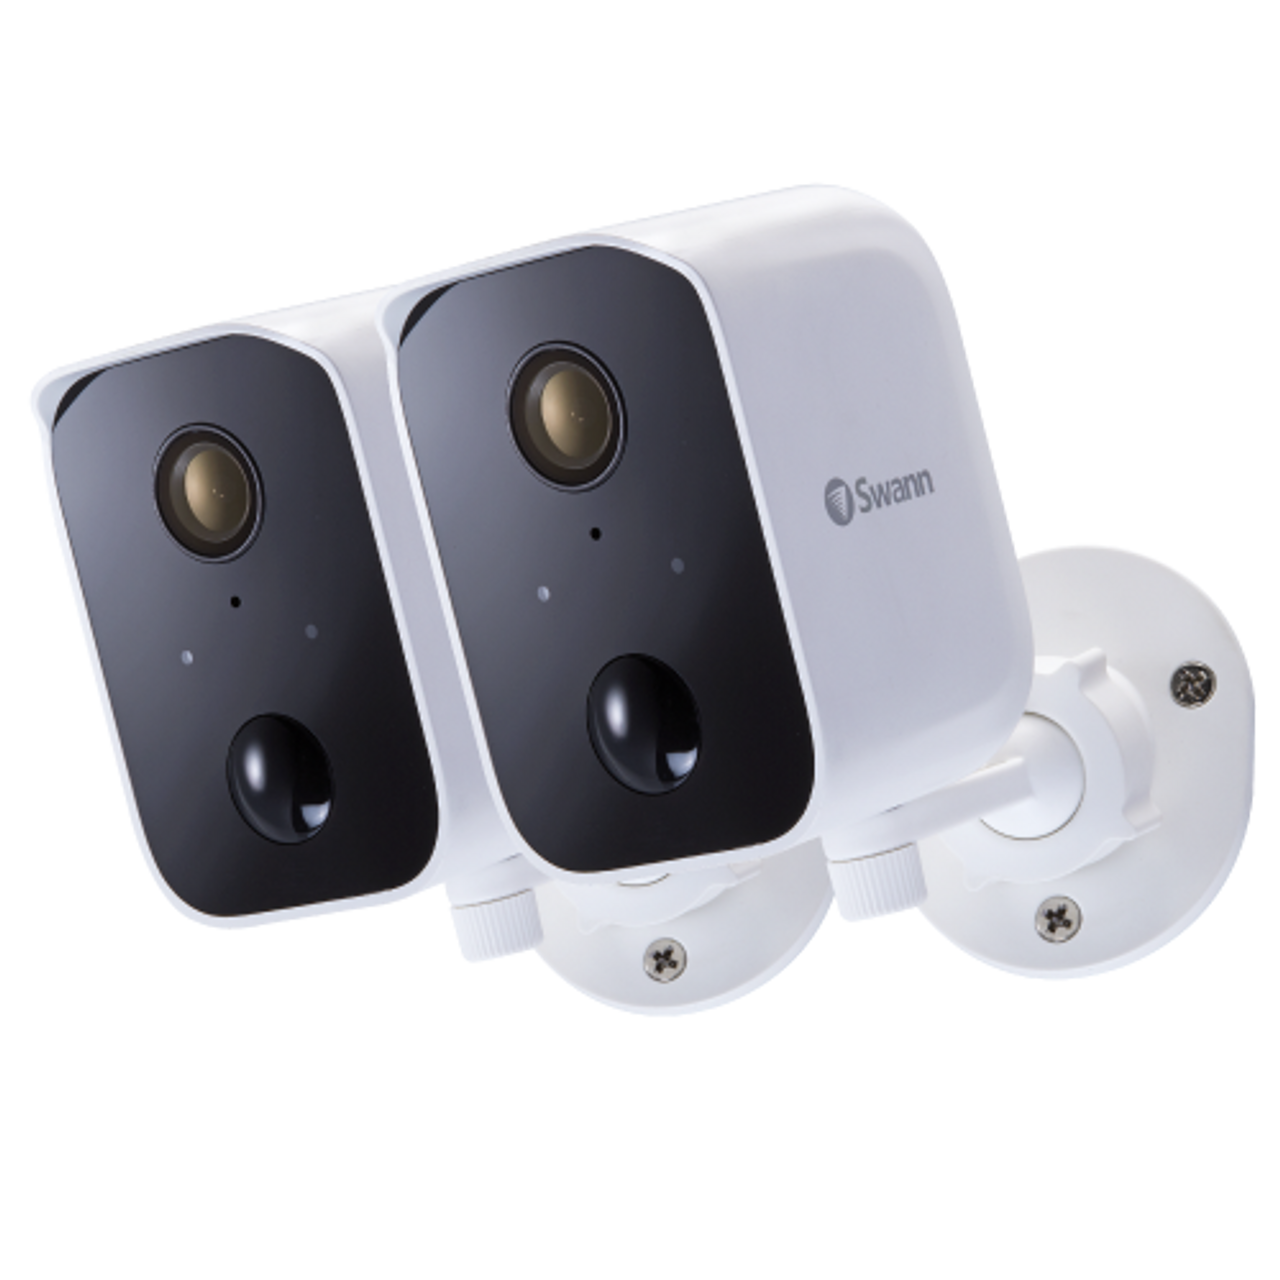 corecam wireless security camera 2 pack - swifi-corecampk2   tech supply shed